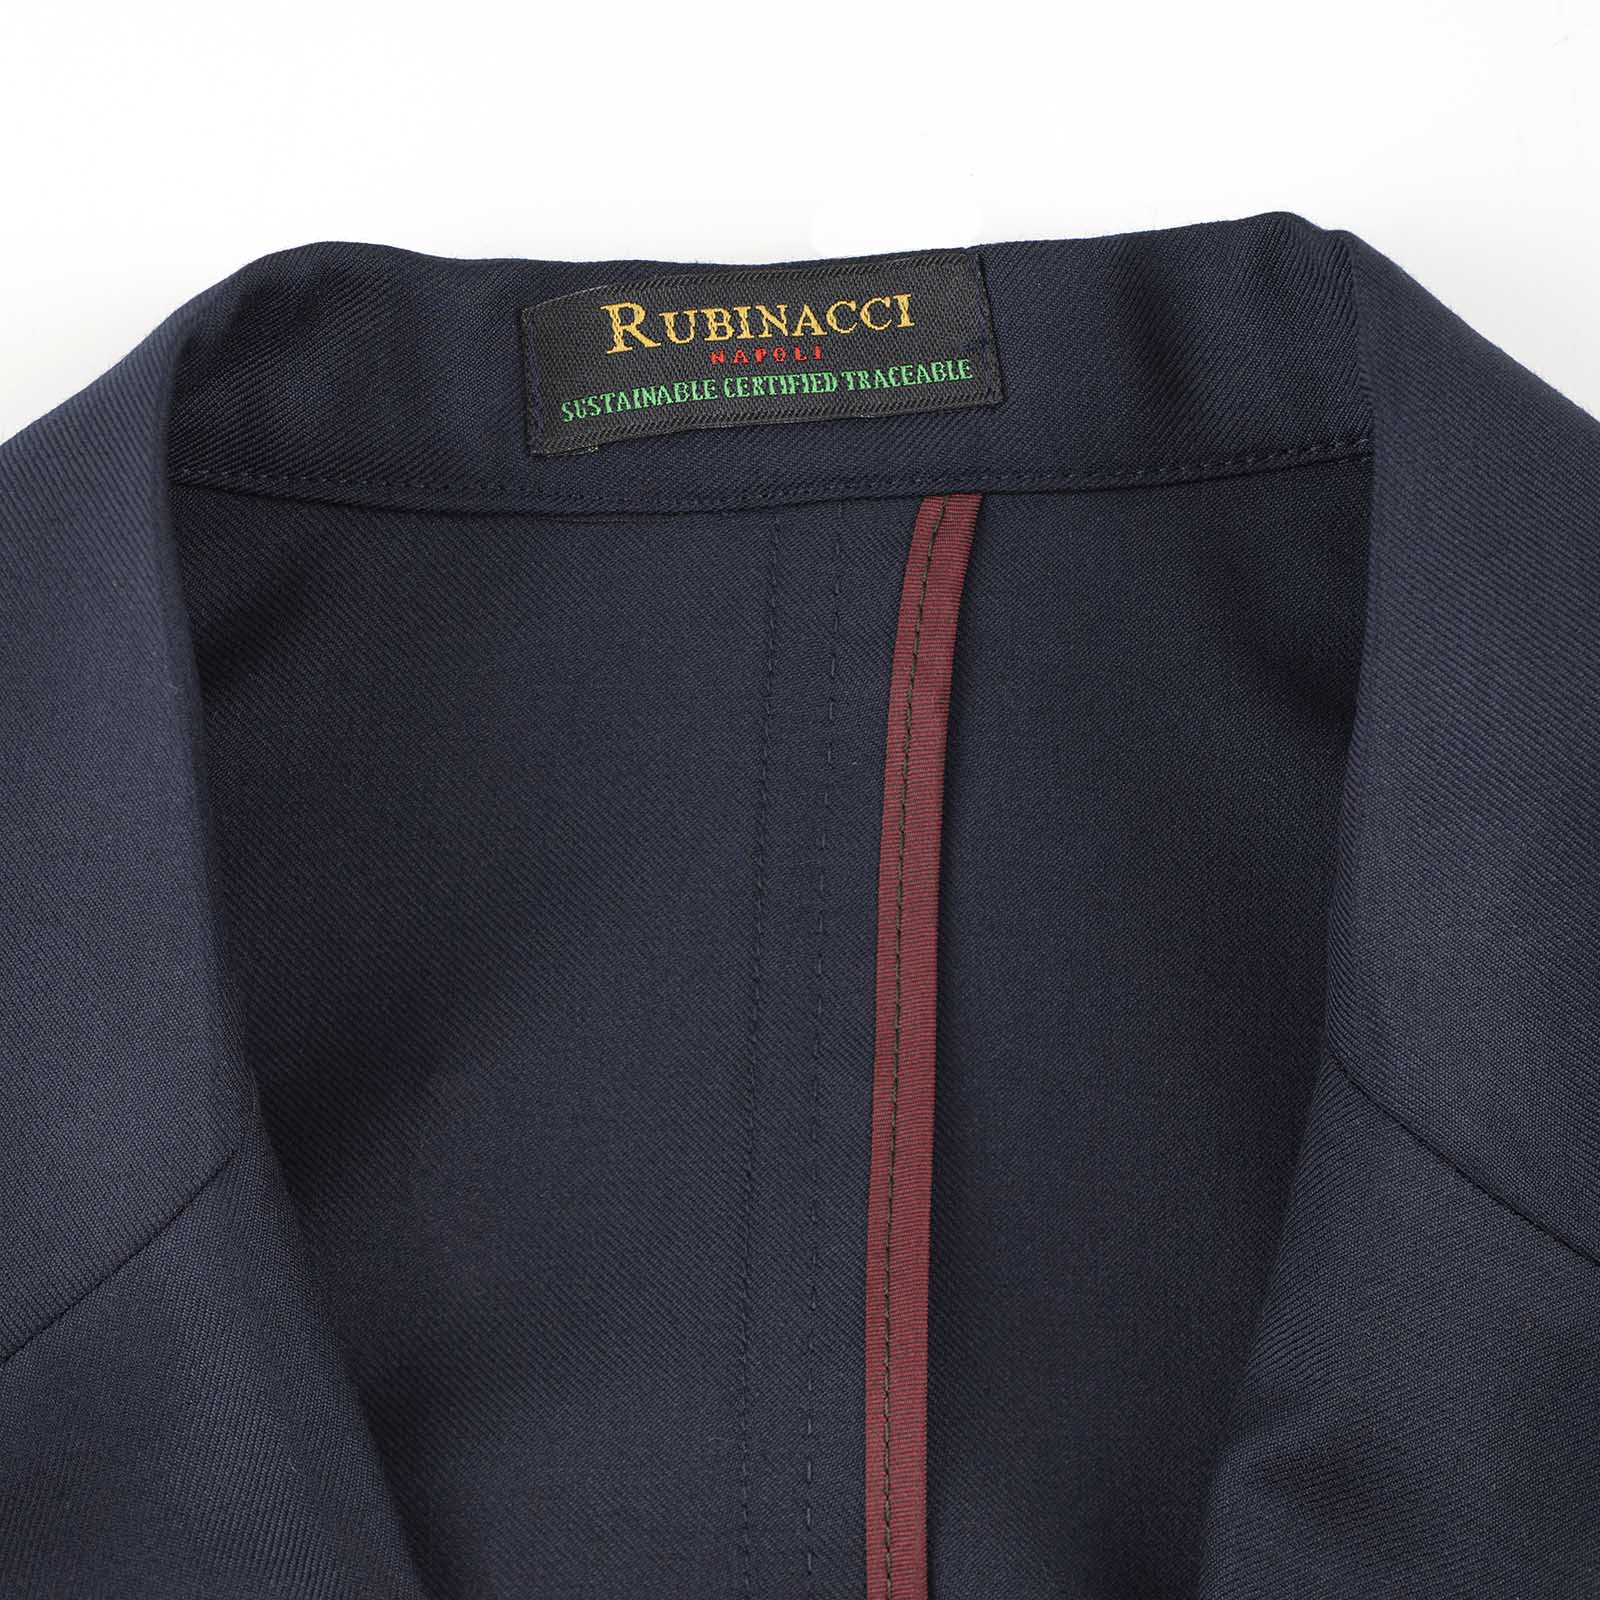 Mariano Rubinacci - Blue “Green Certified” wool jacket